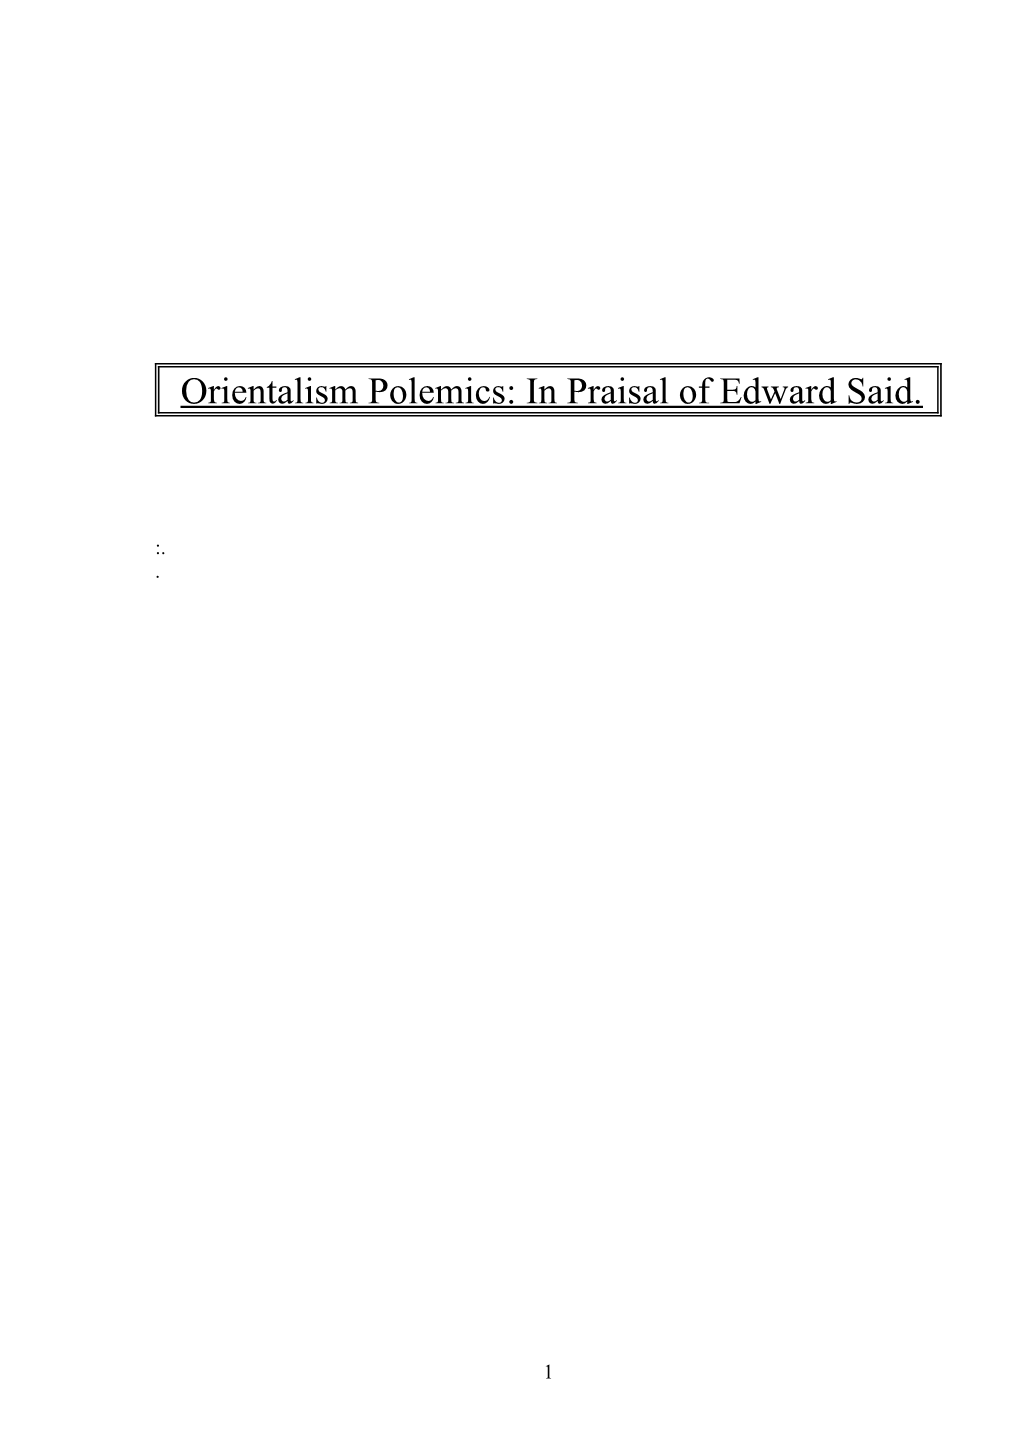 Topic: Orientalism Polemics: in Praisal of Edward Said